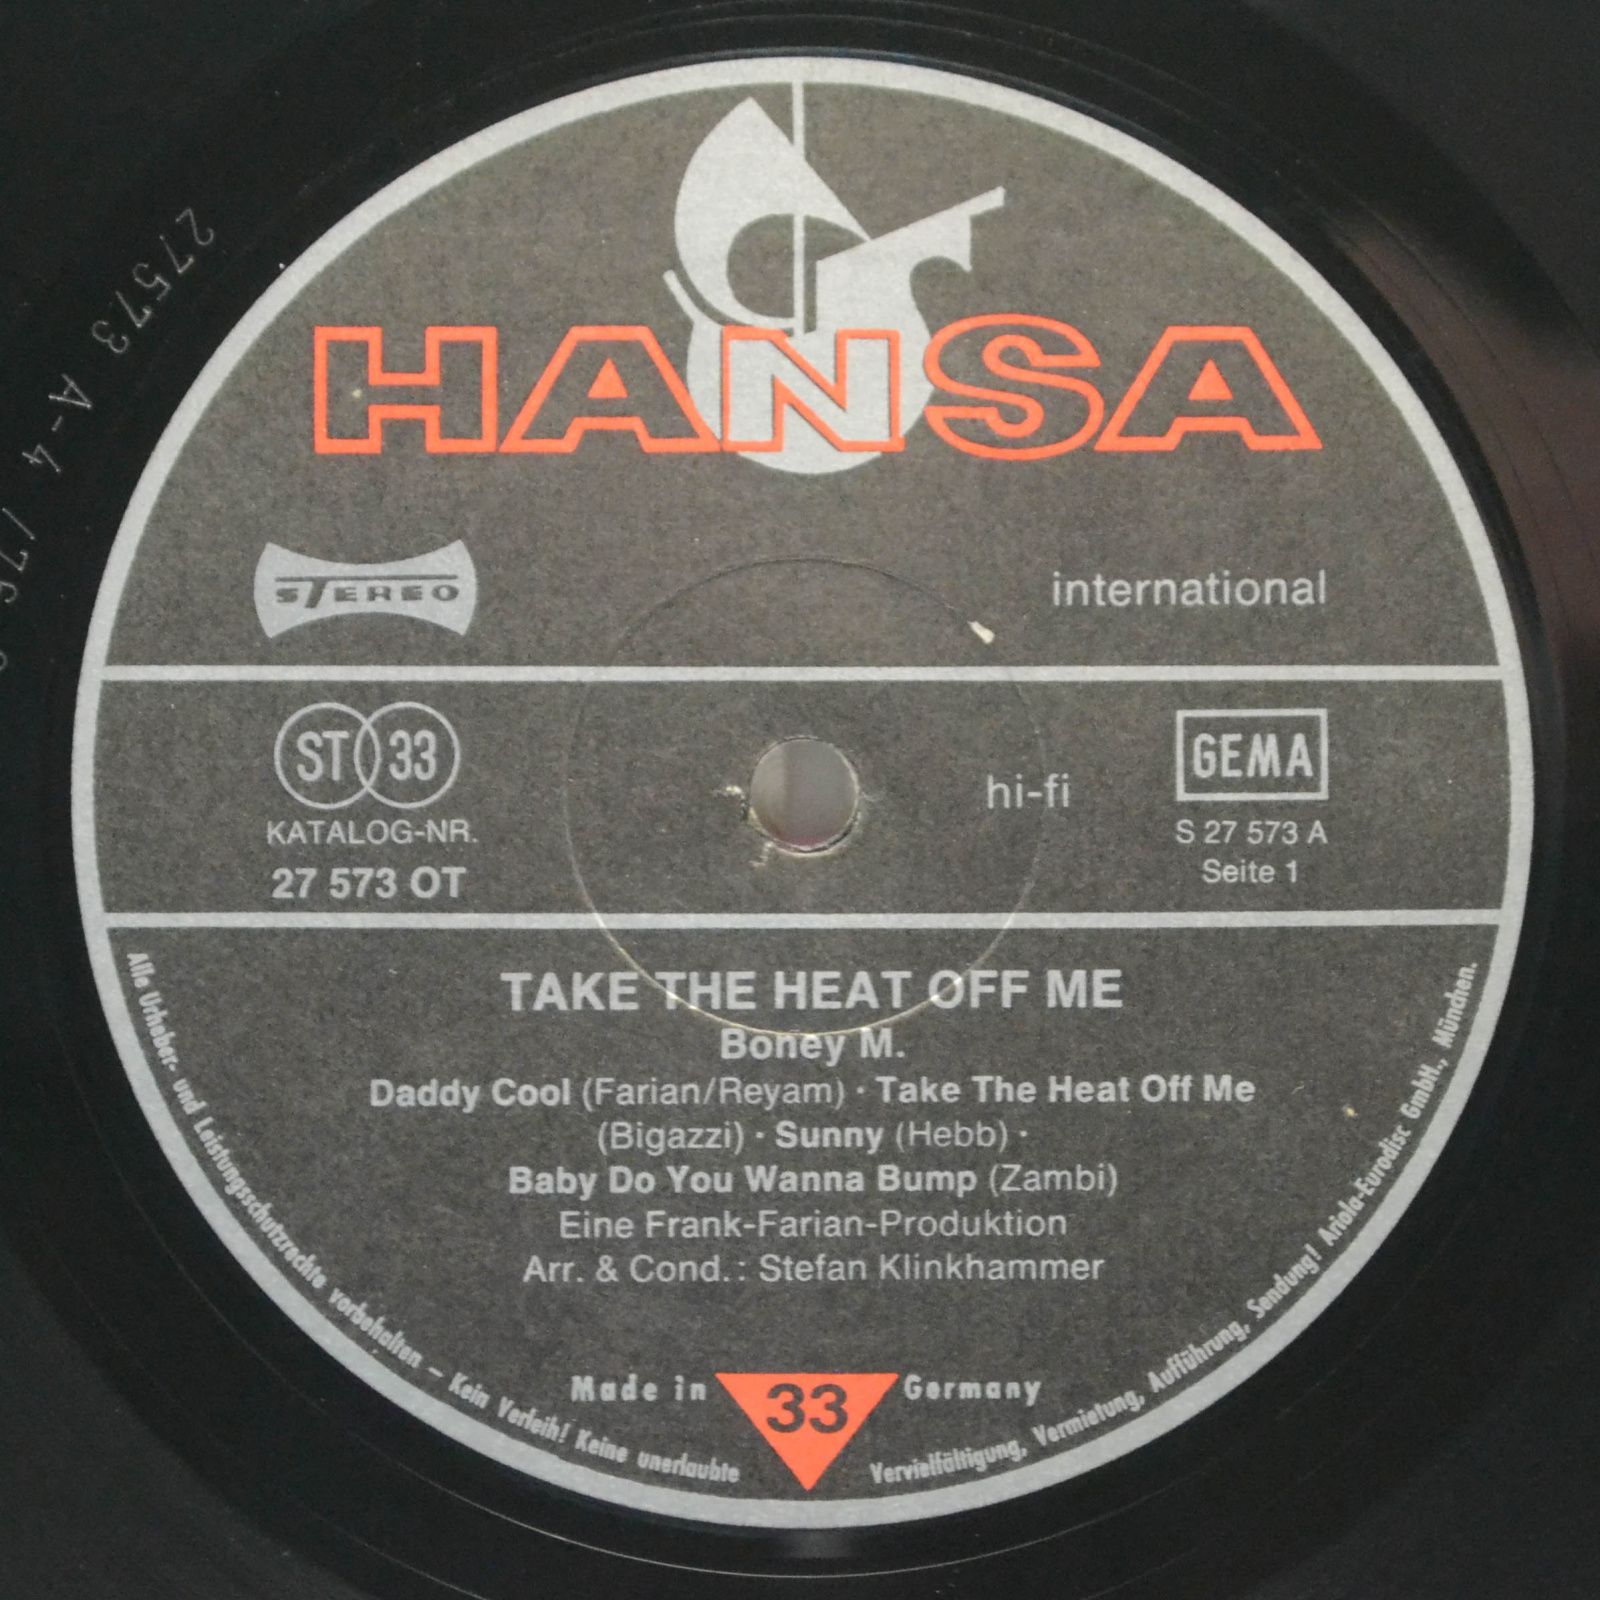 Boney M. — Take The Heat Off Me, 1976